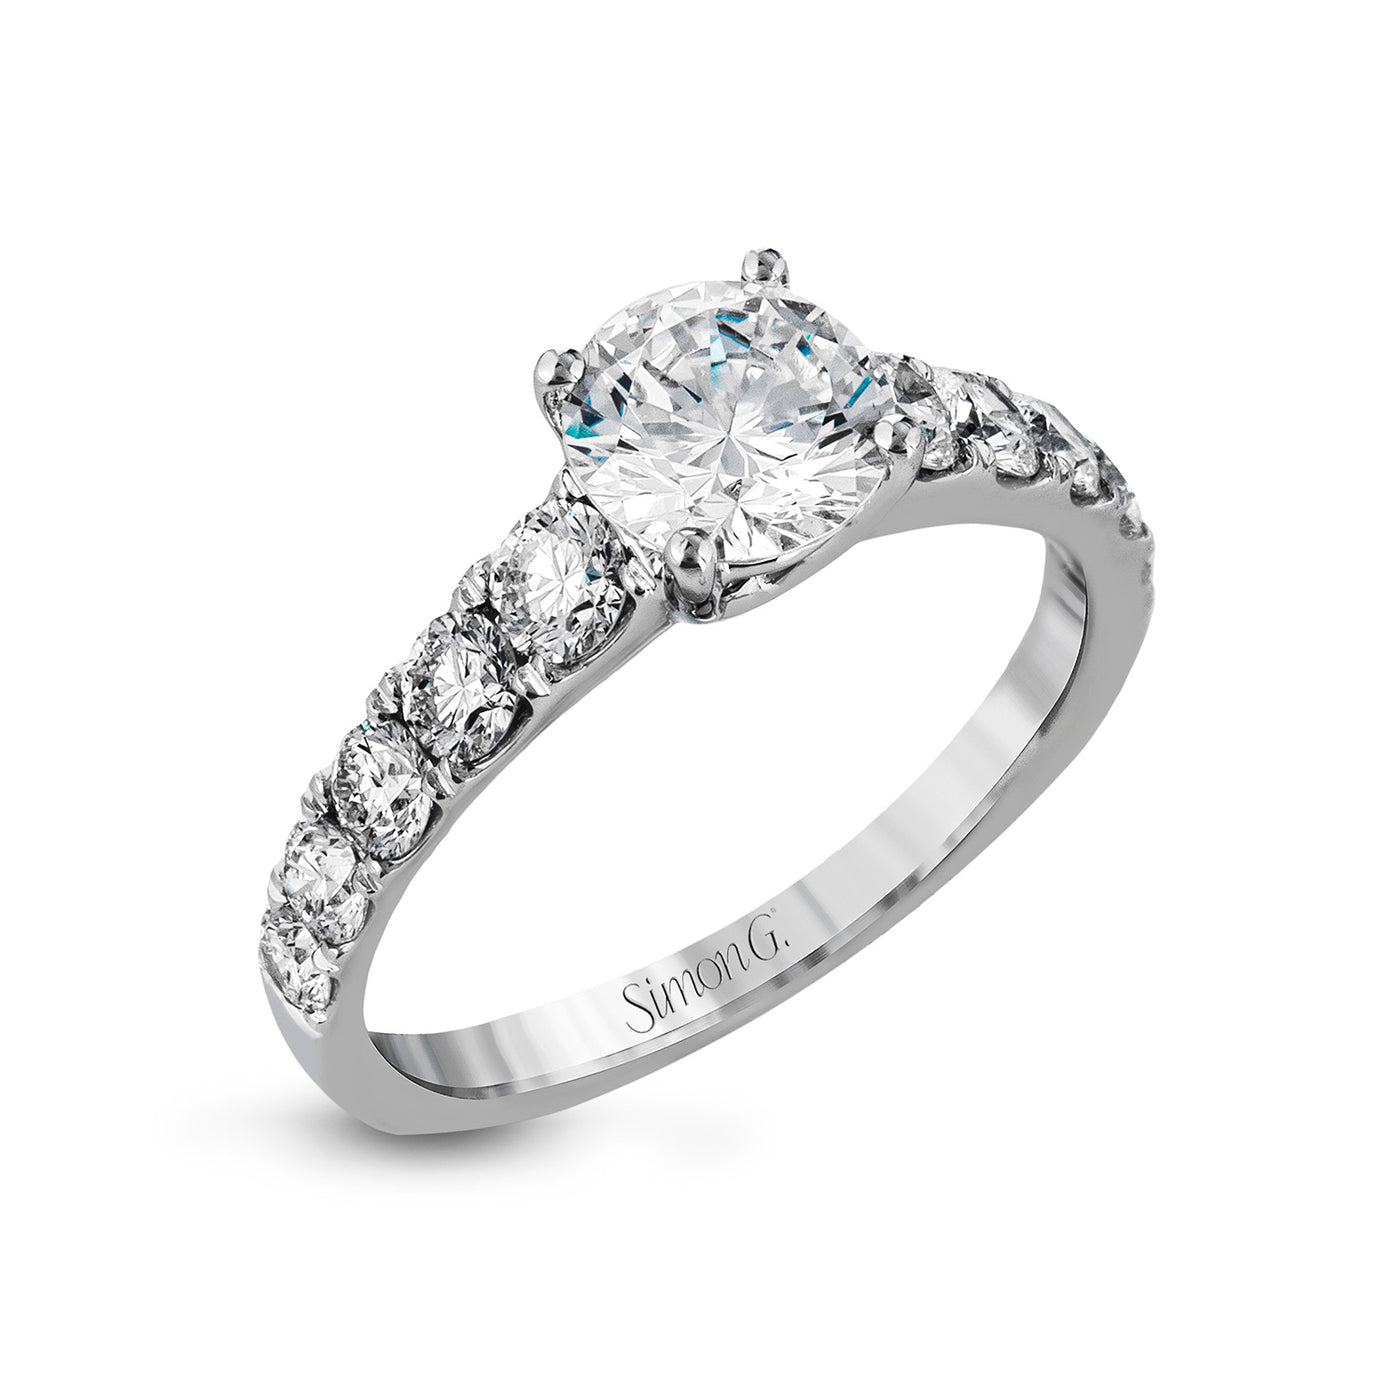 Simon G 18k White Gold Round Straight Diamond Semi-Mount Engagement Ring – MR2548